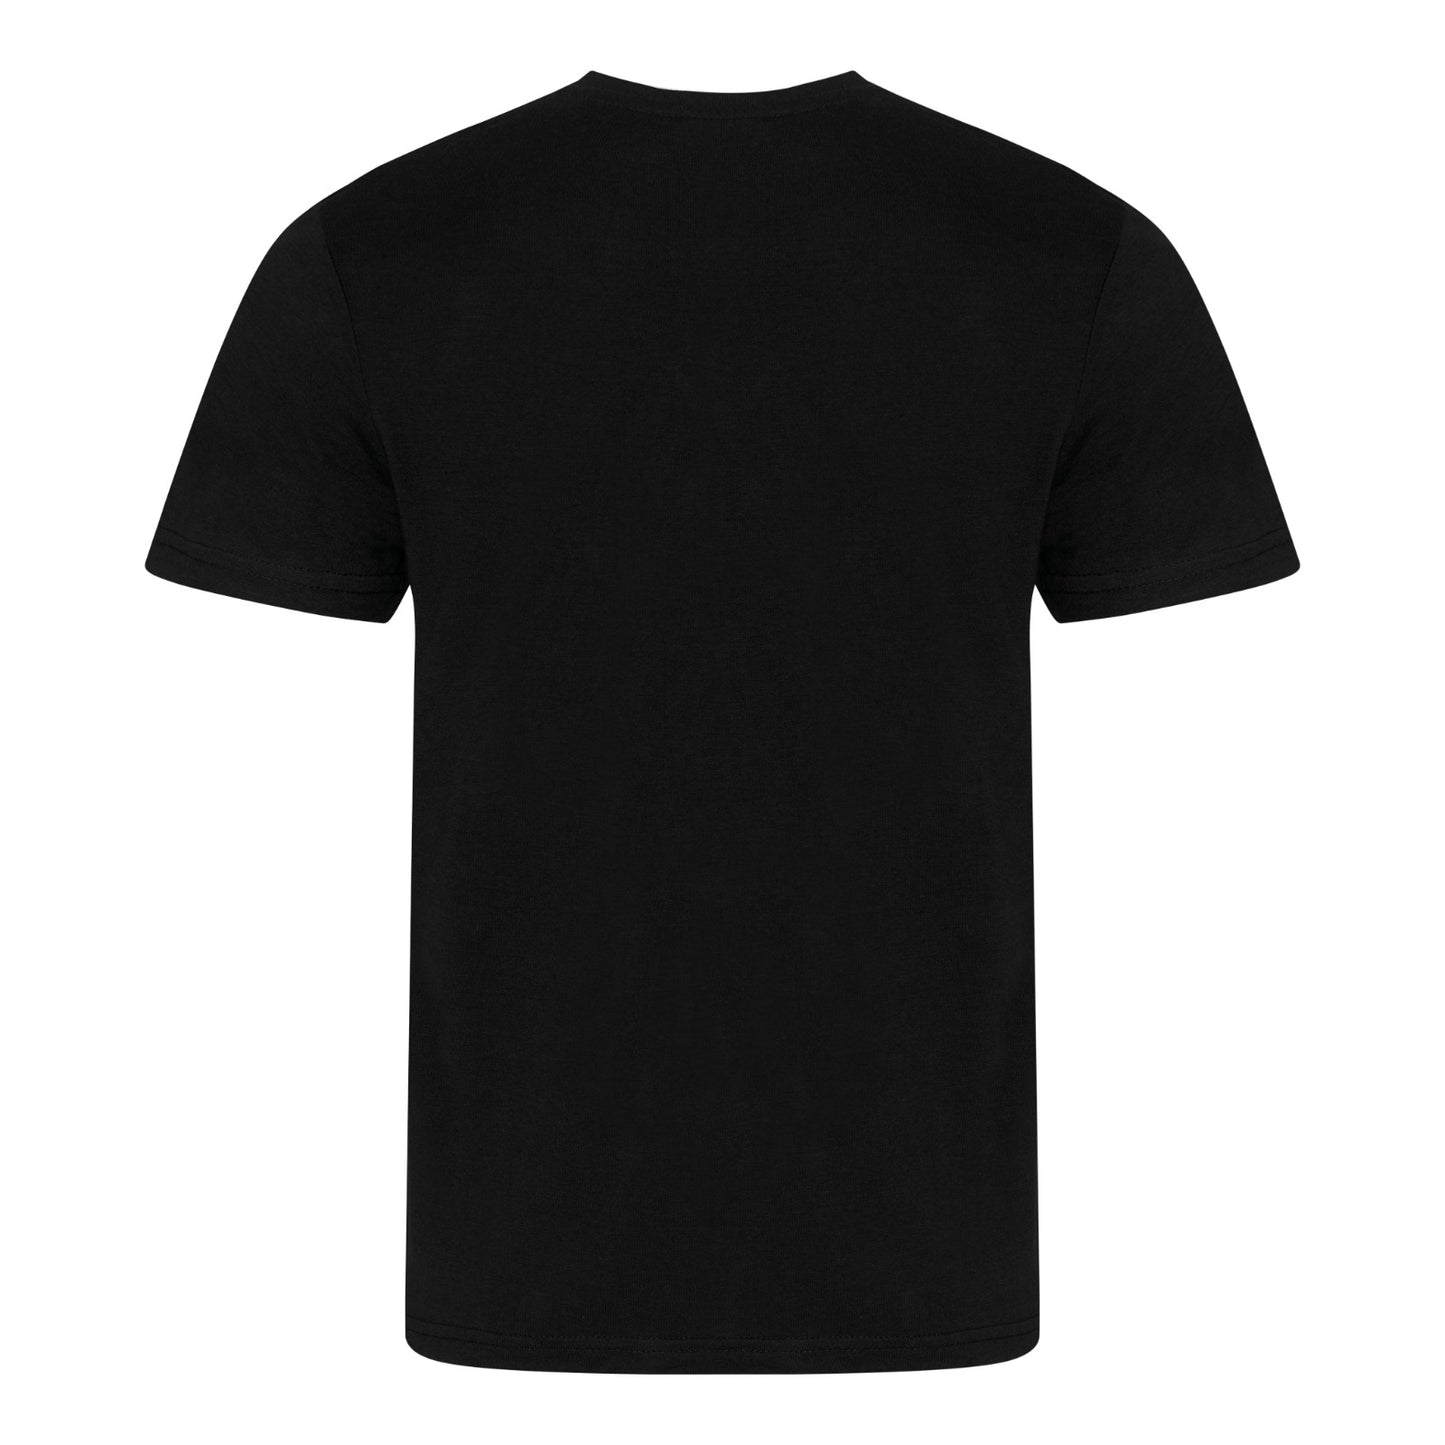 Eat,Sleep,Game,Repeat Black Short Sleeved T-Shirt